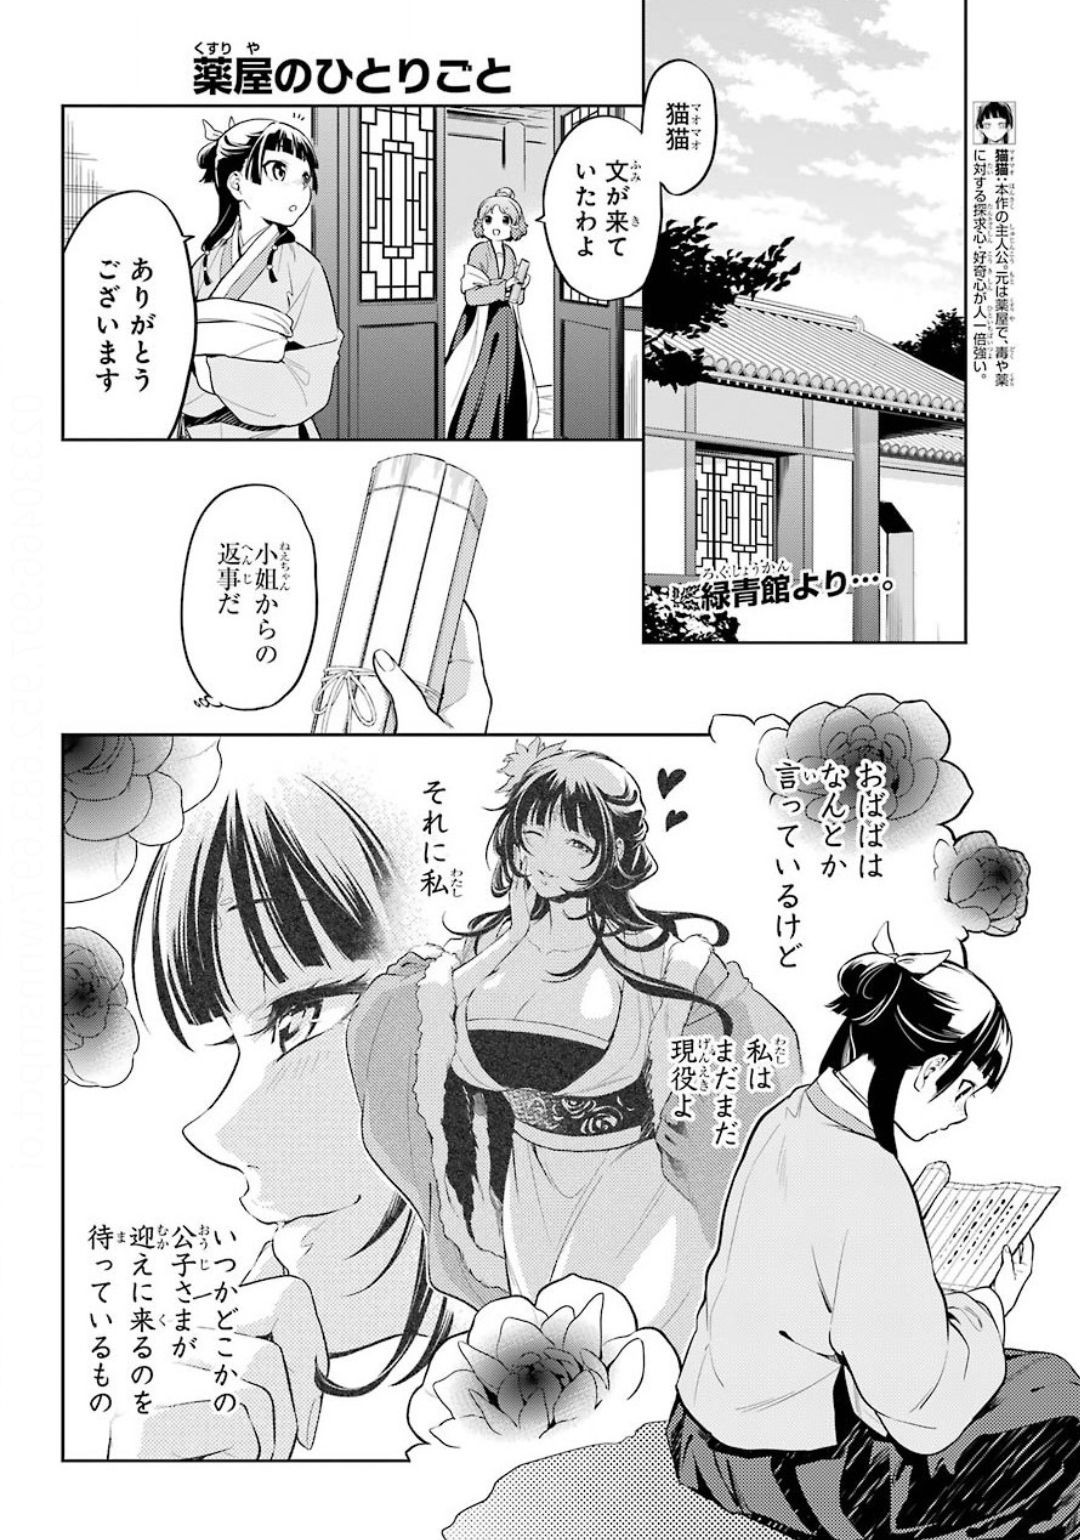 Kusuriya no Hitorigoto - Chapter 36-1 - Page 2